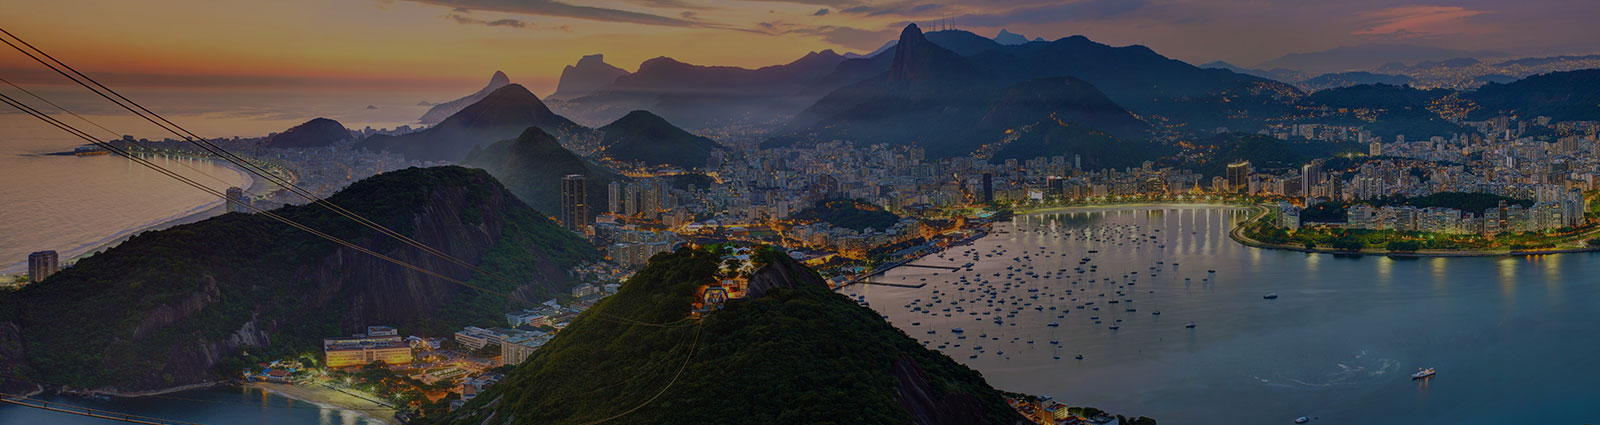 Sunset in Rio de Janeiro, Brazil on the Sugar Loaf Mountain.